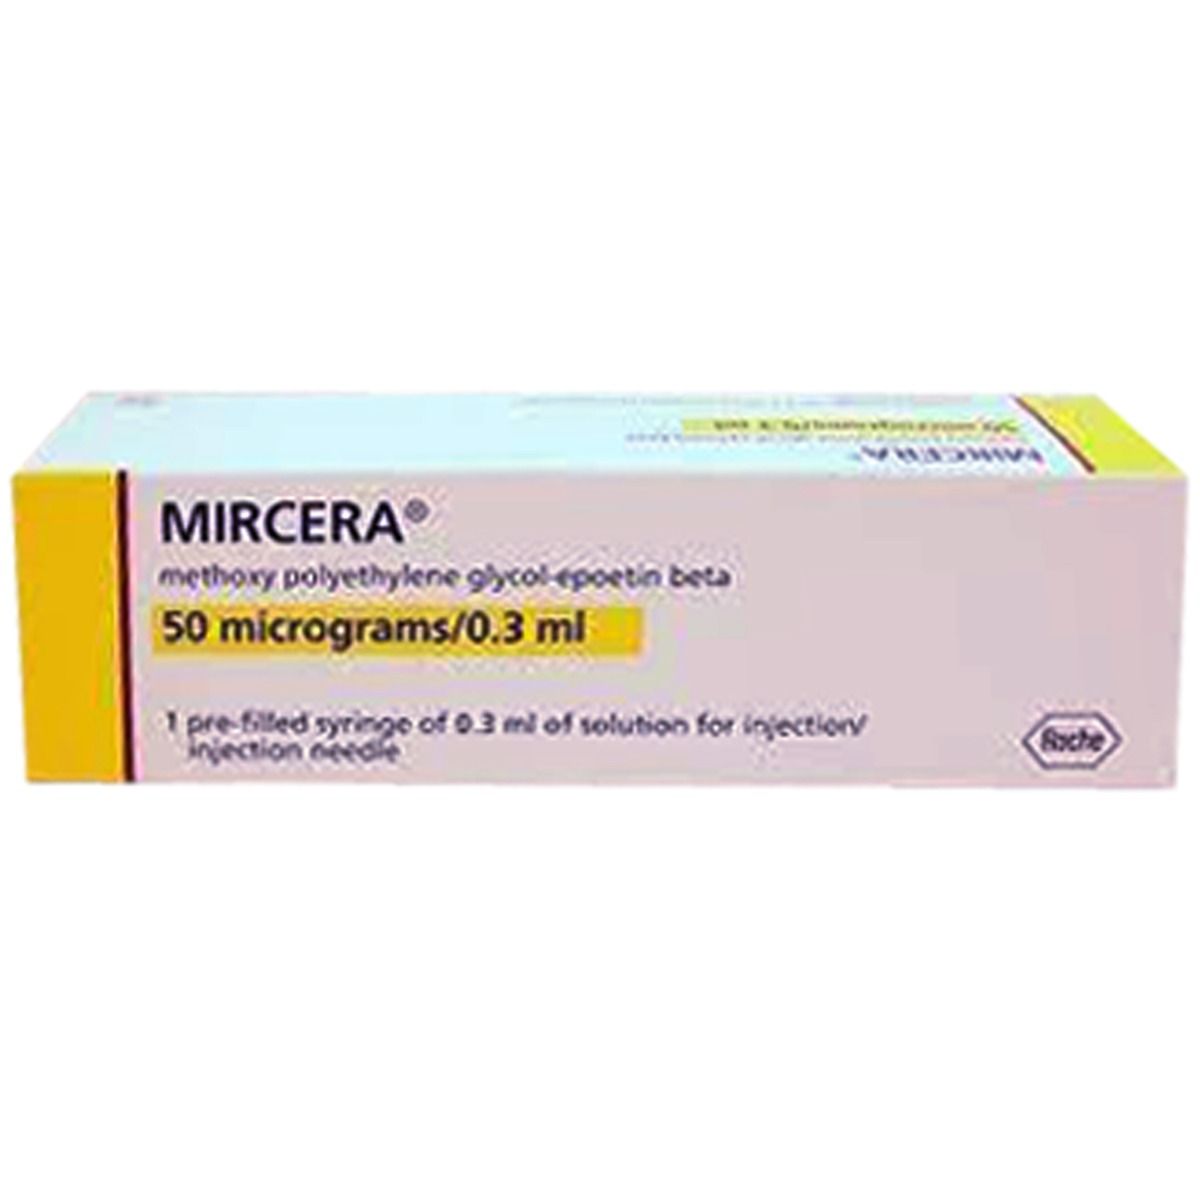 Buy Mircera 50mcg Injection 0.3 ml Online